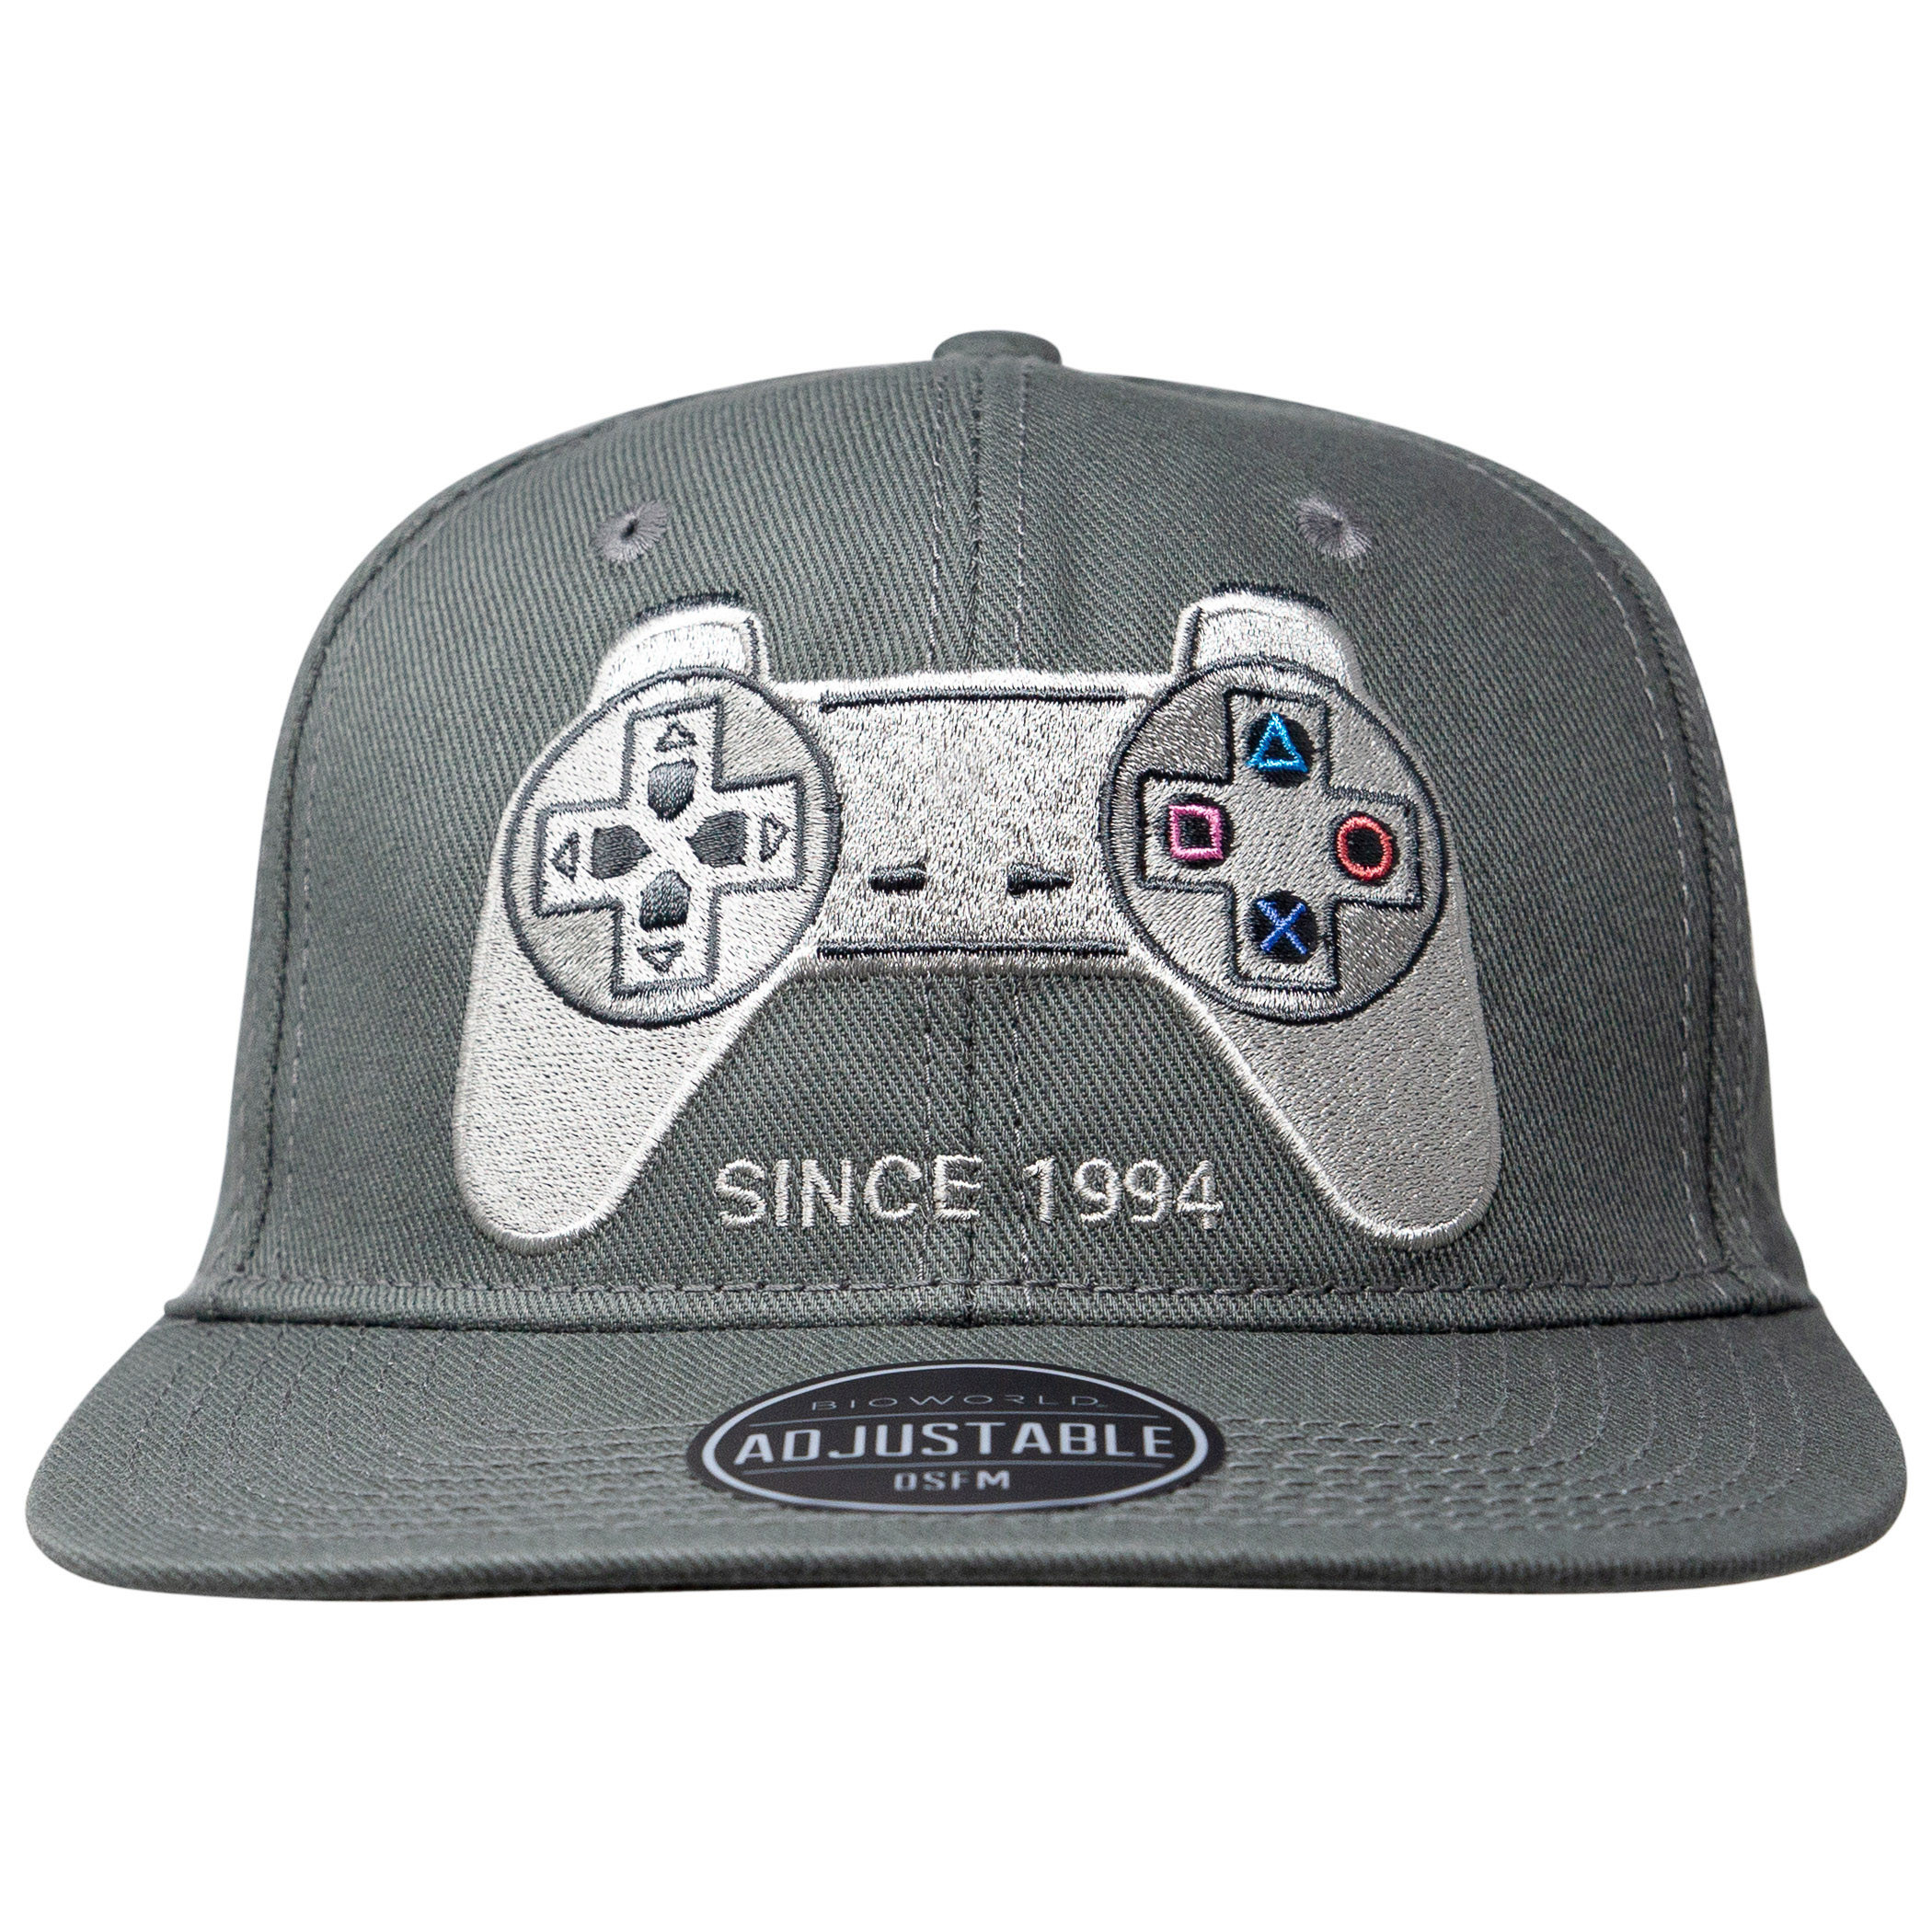 PlayStation Since 1994 Adjustable Grey Snapback Hat